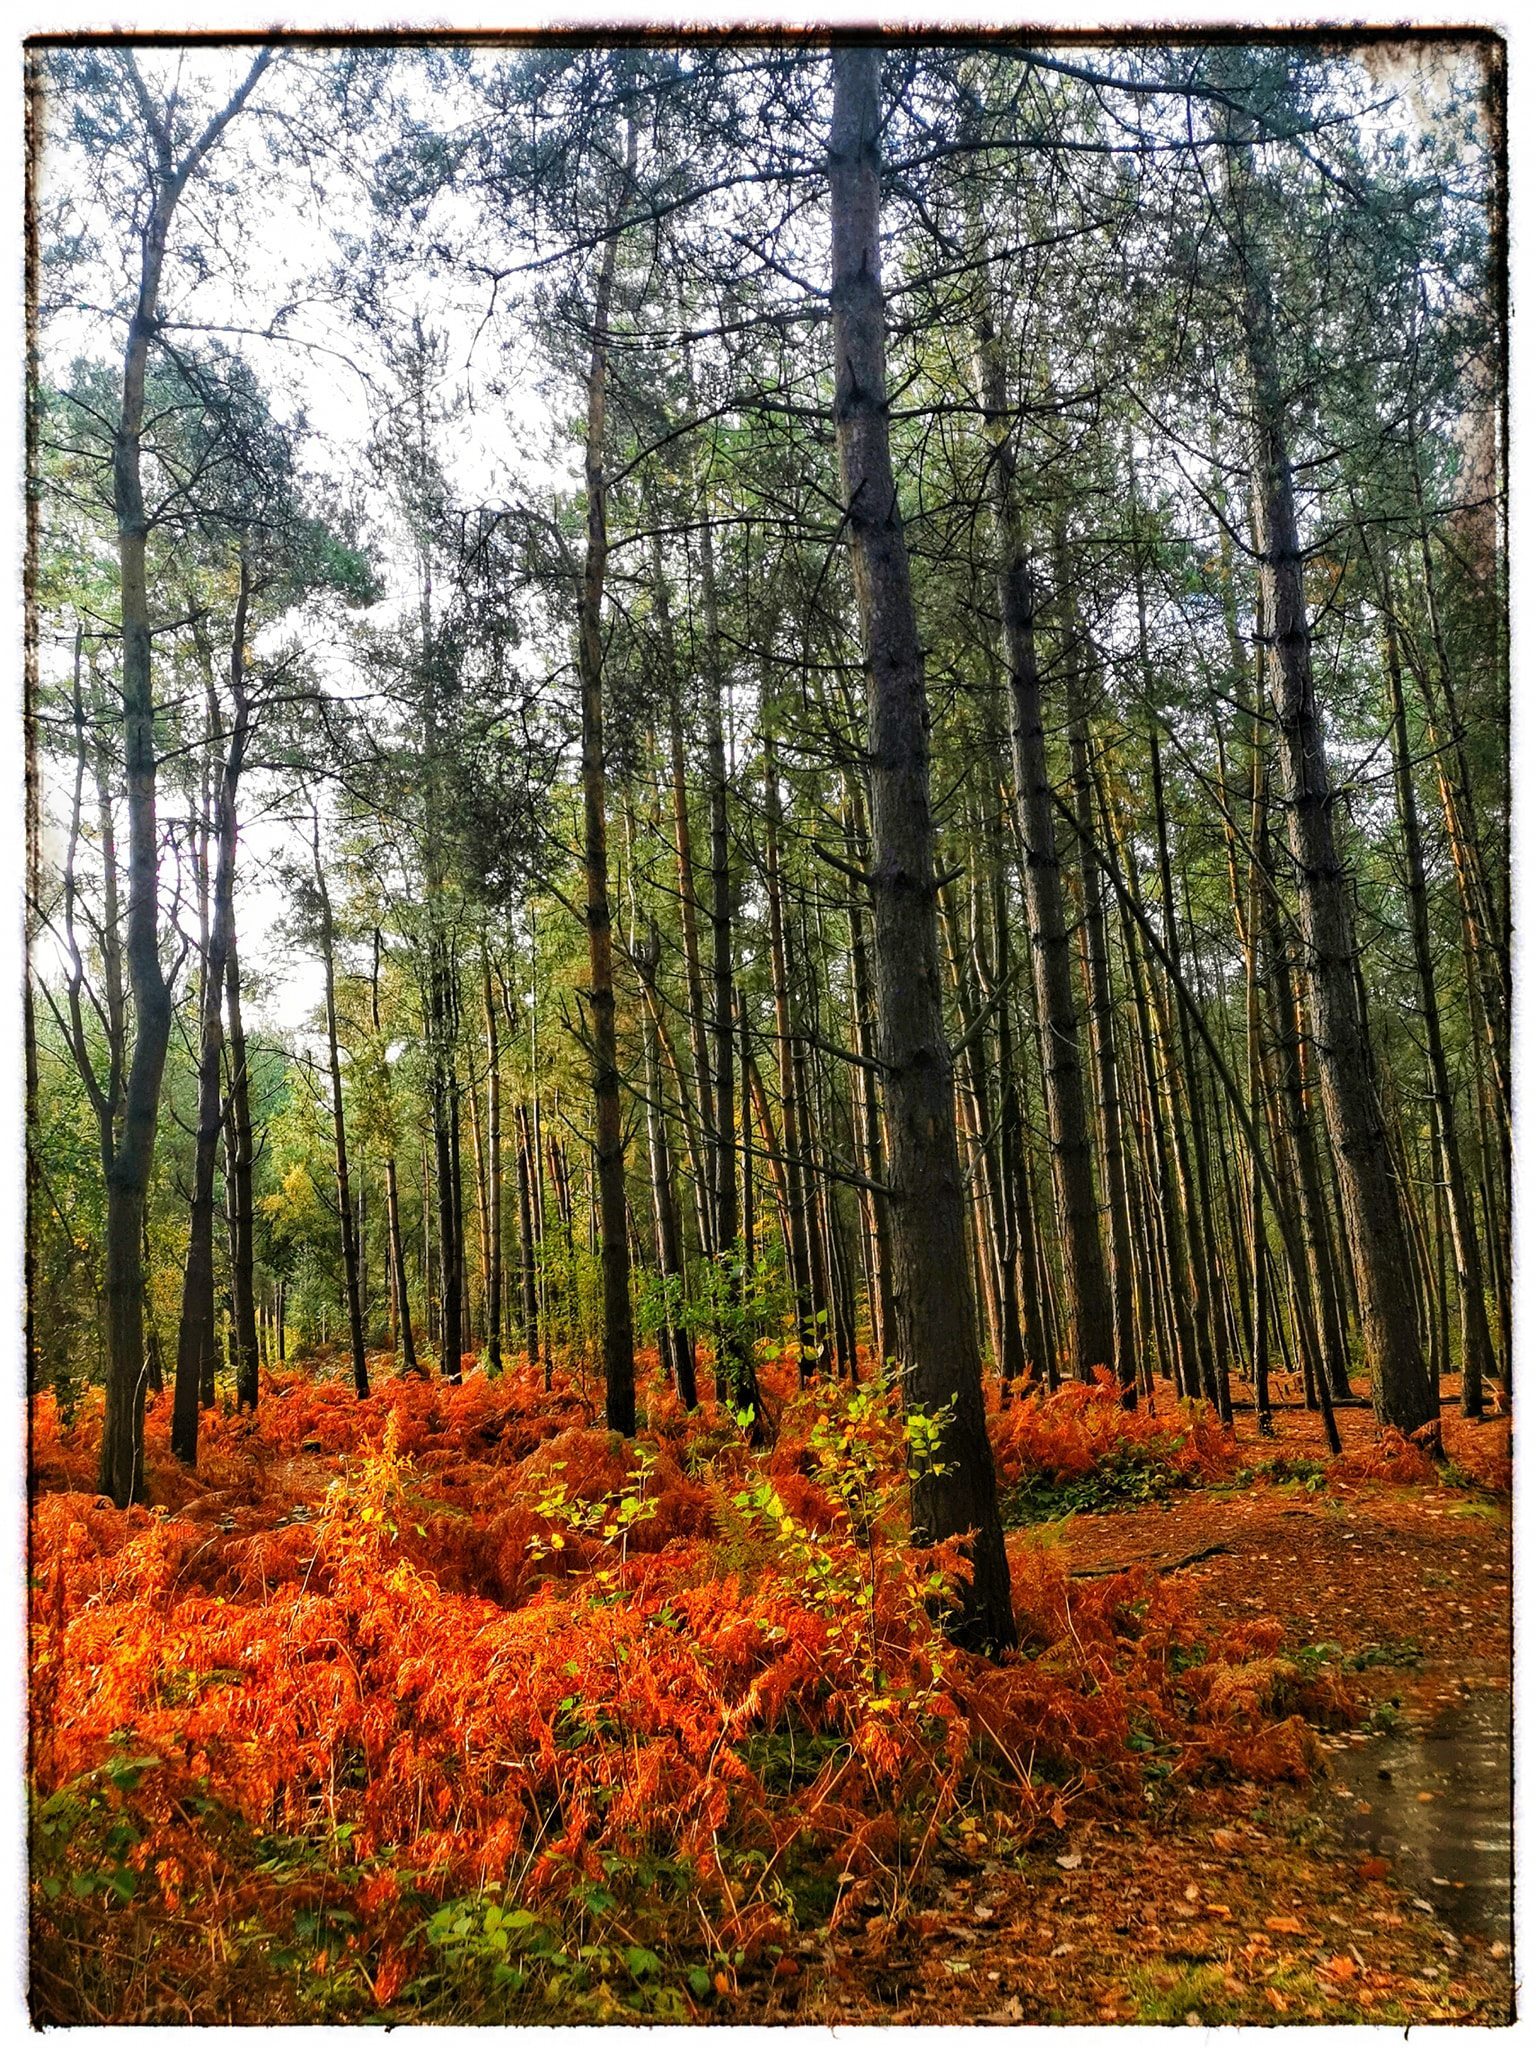 Delamere Forest (Picture credit: Patricia Dyson)